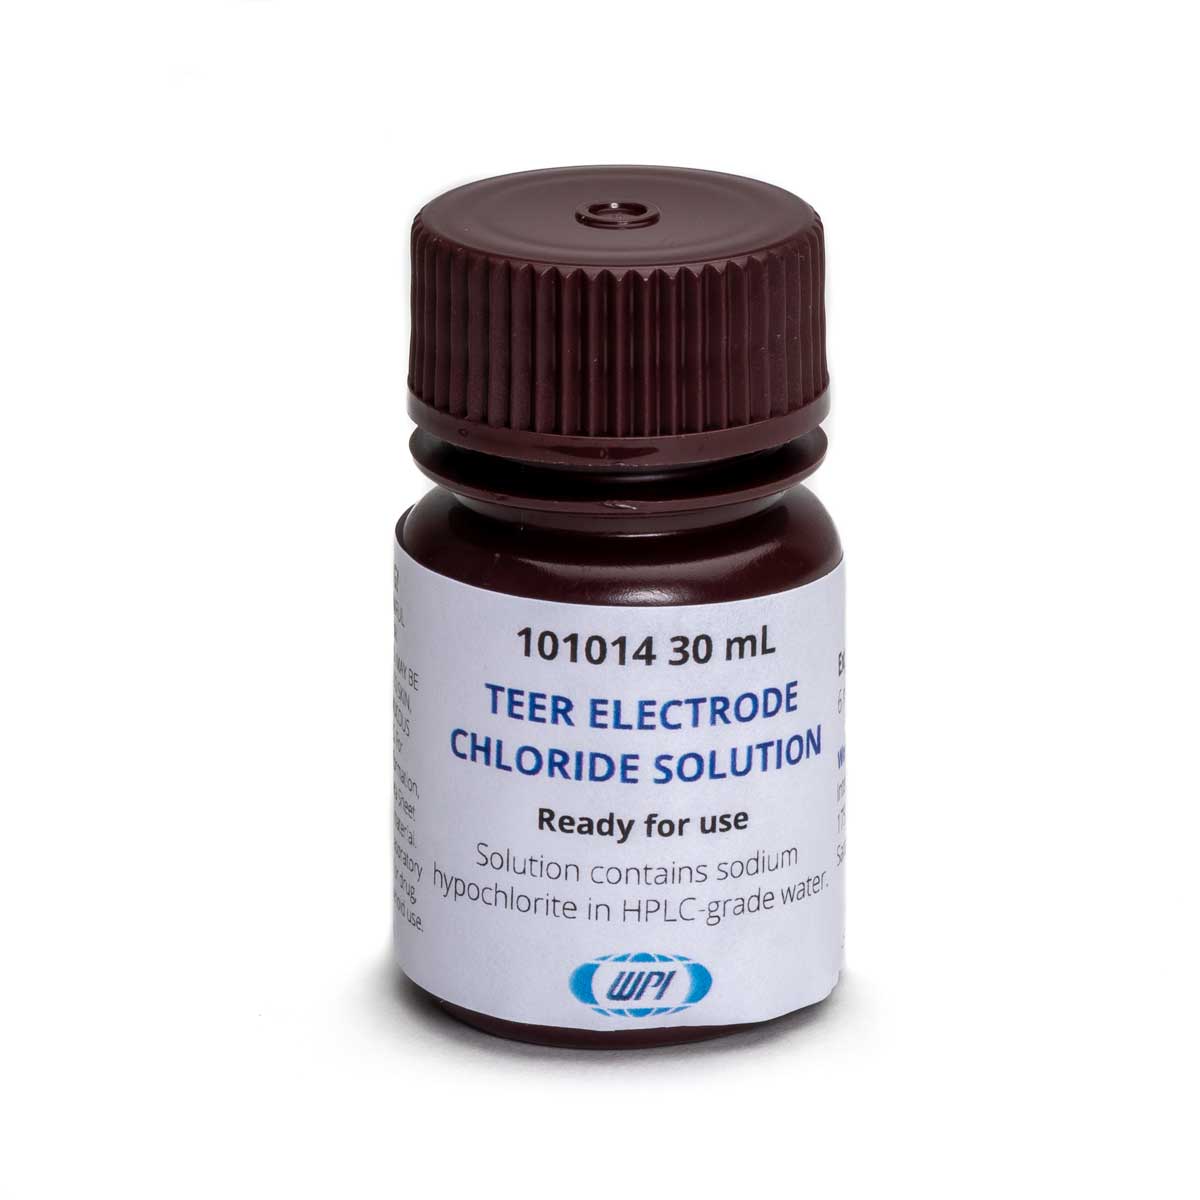 TEER Electrode Chloride Solution